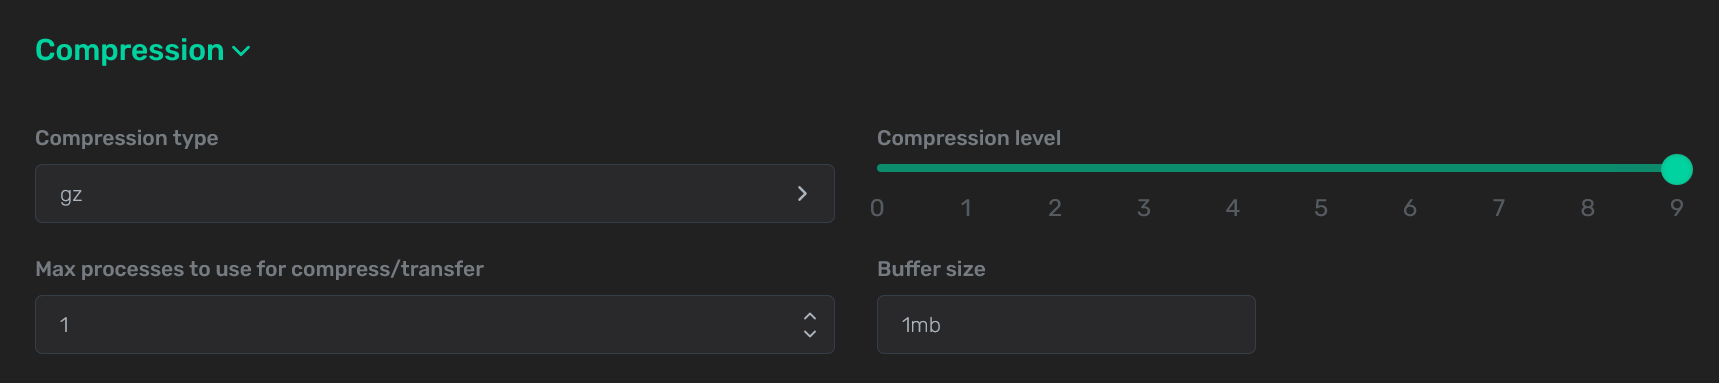 adbm config compression dark